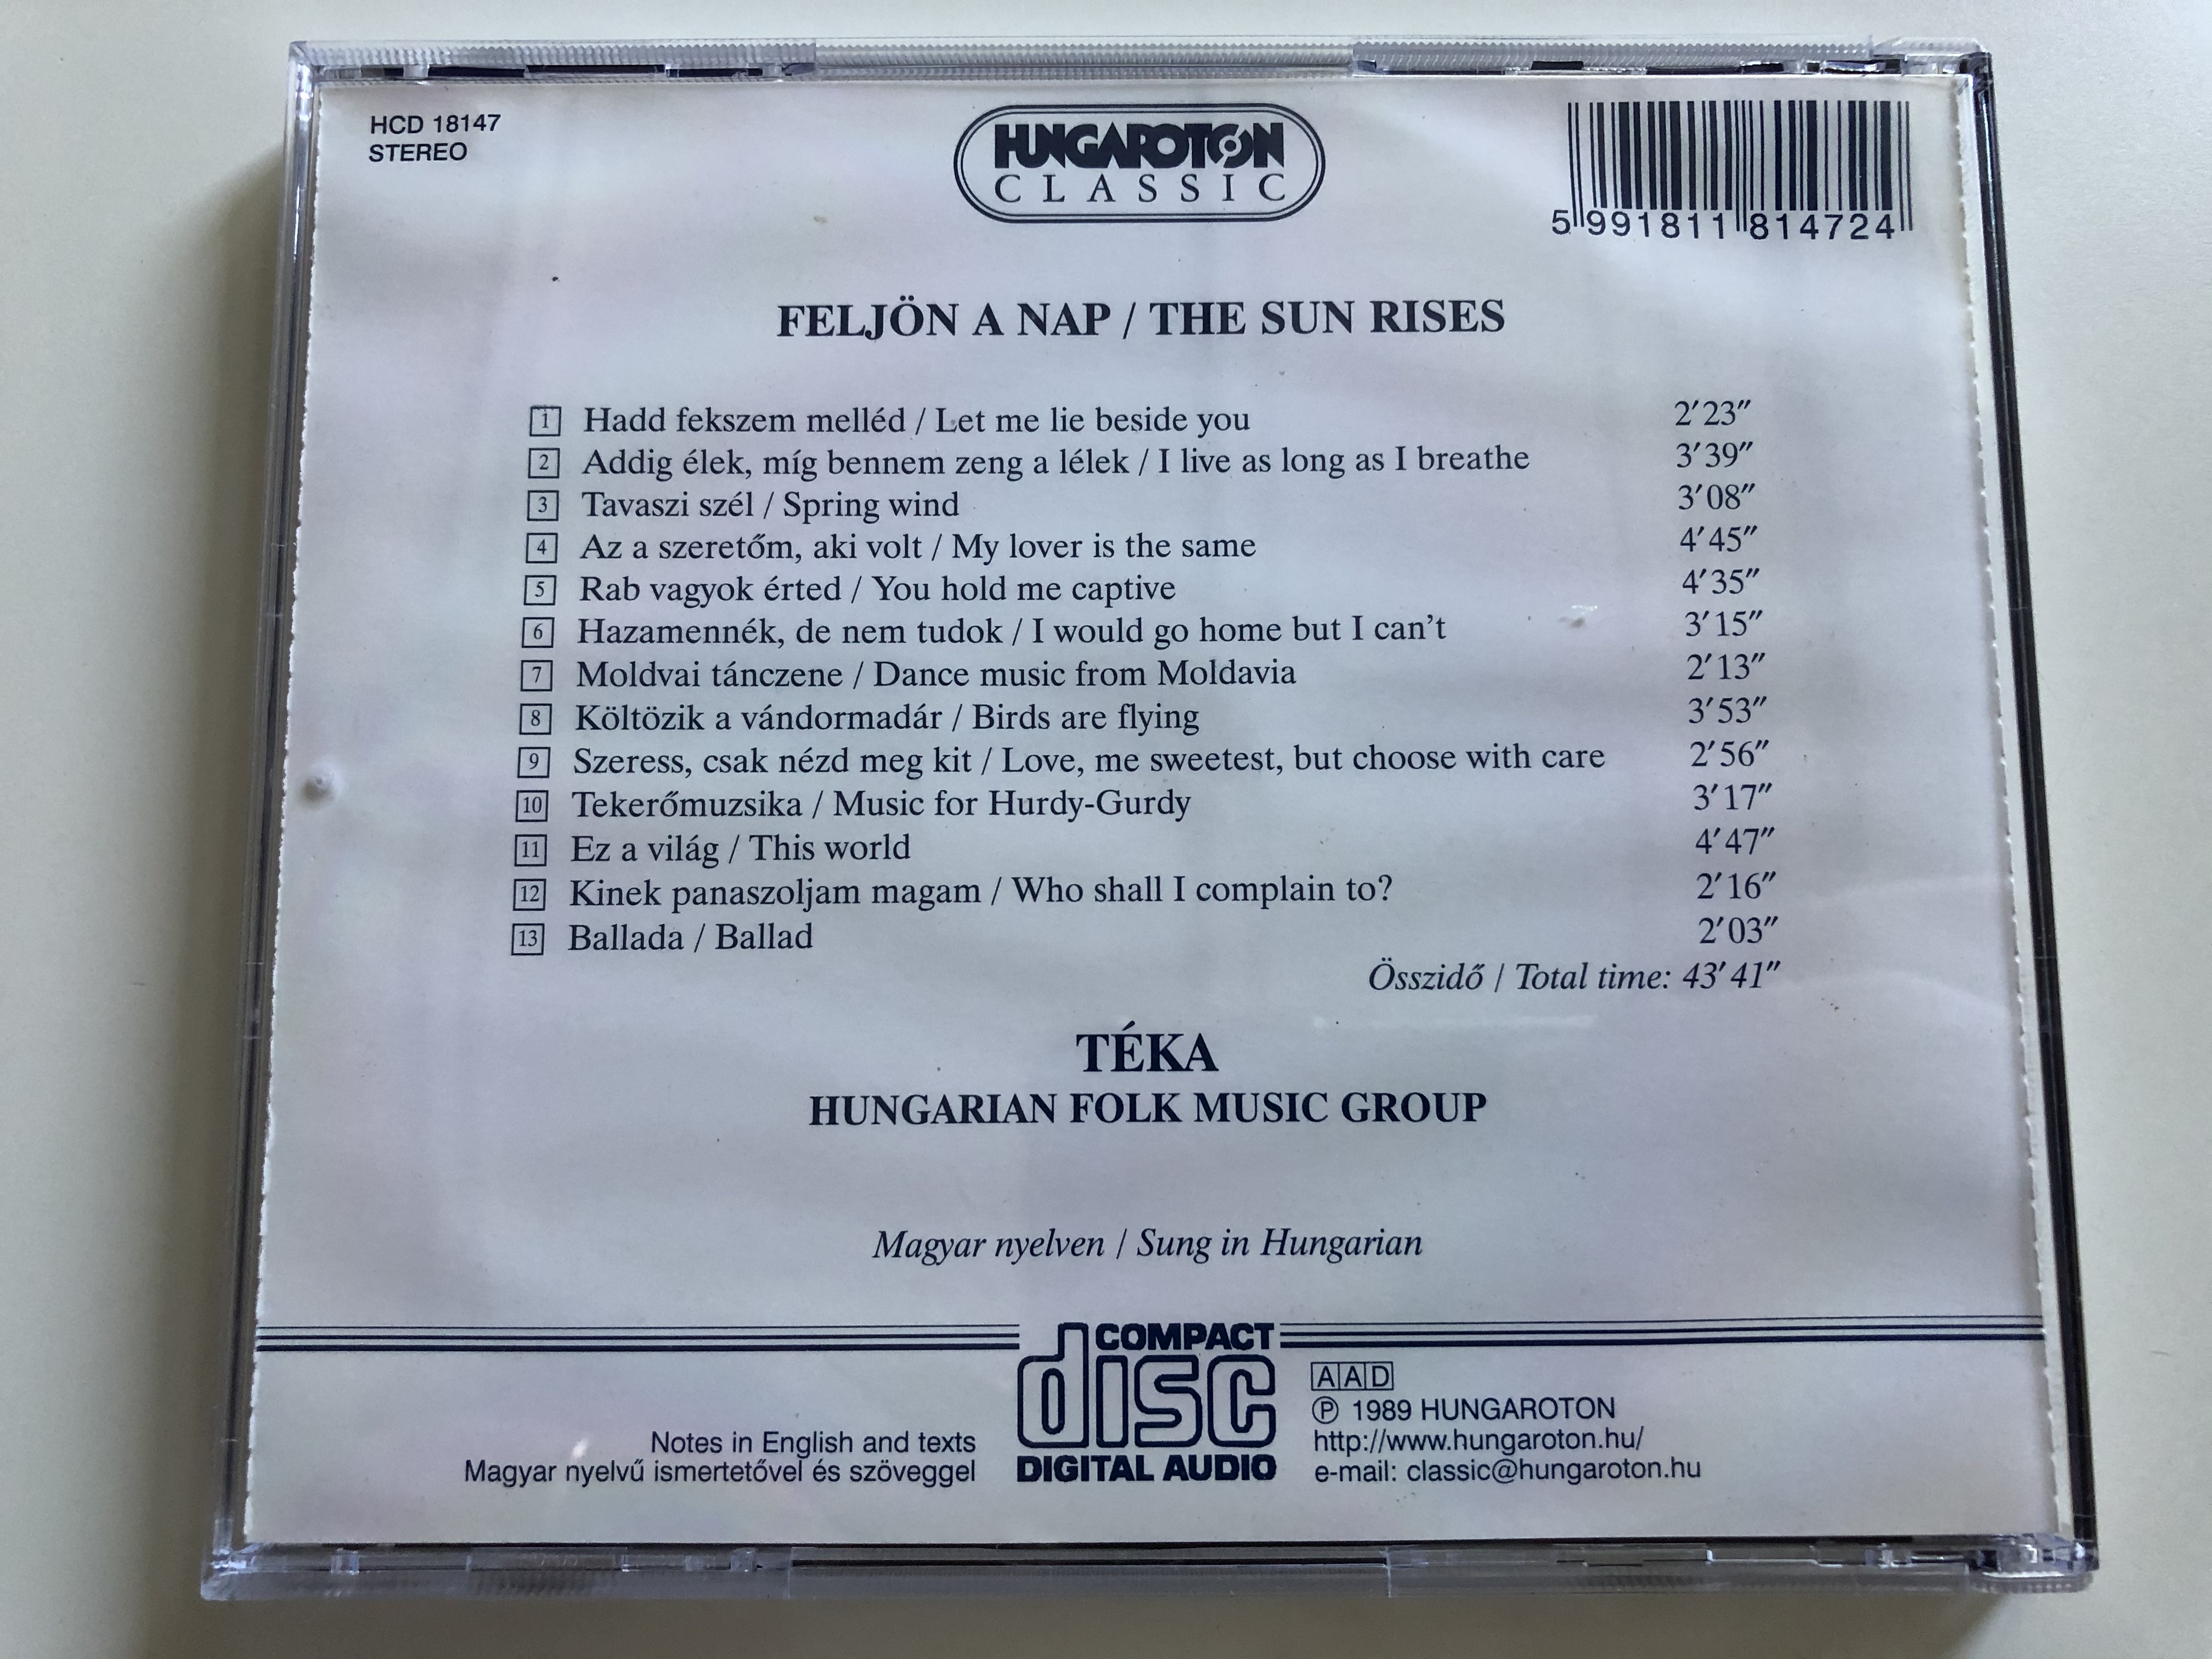 the-sun-rises-feljon-a-nap-teka-hungarian-folk-music-group-hungaroton-classic-audio-cd-1989-stereo-hcd-18147-9-.jpg